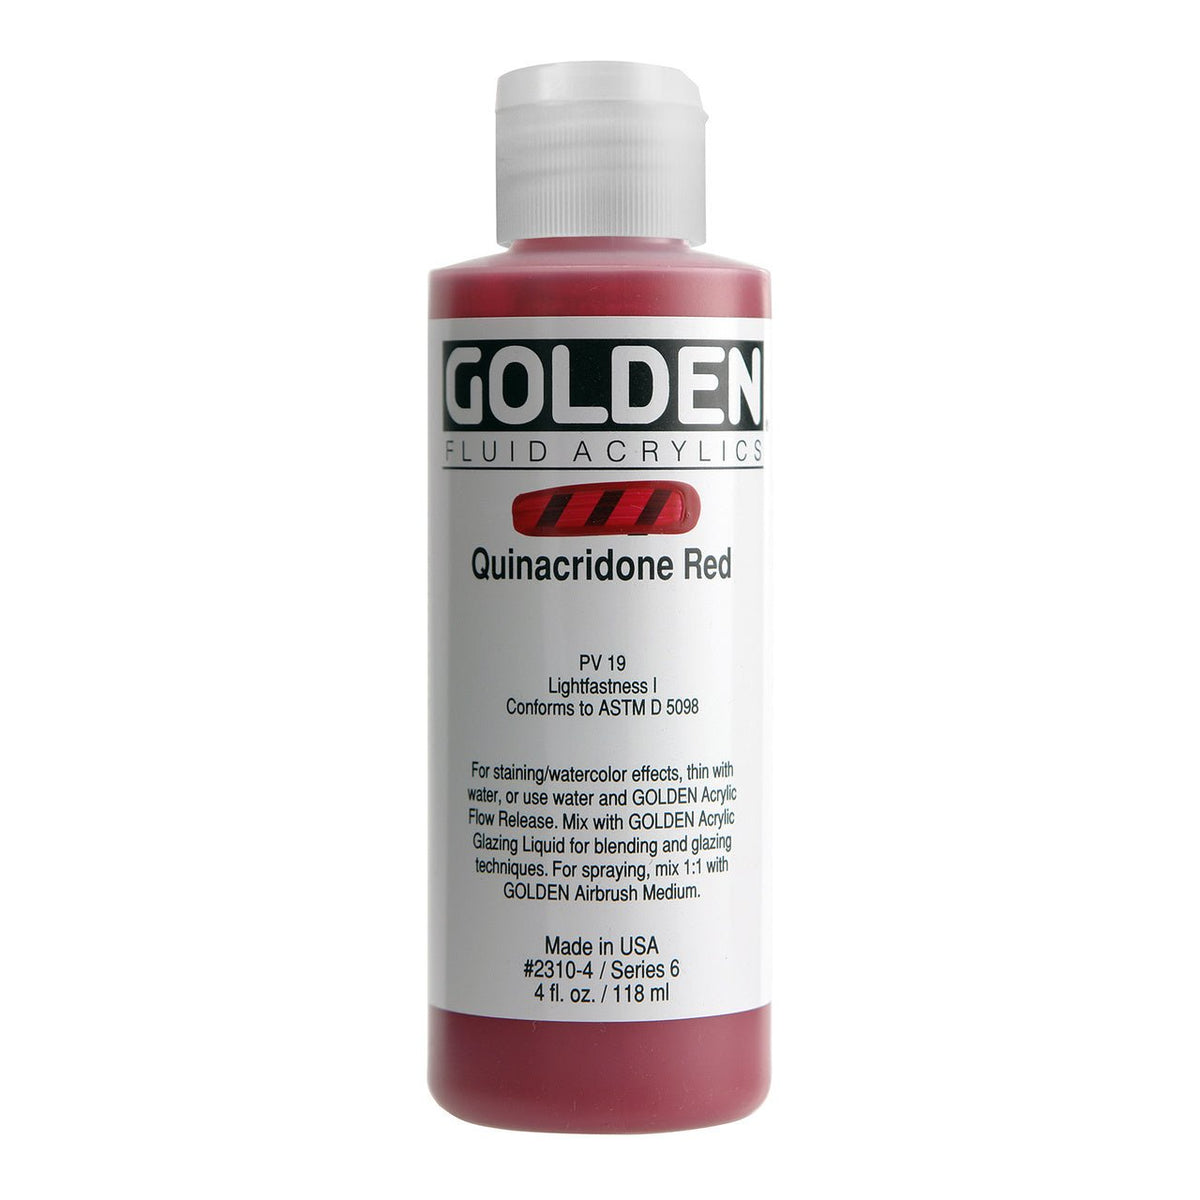 Golden Fluid Acrylic Quinacridone Red 4 oz - merriartist.com